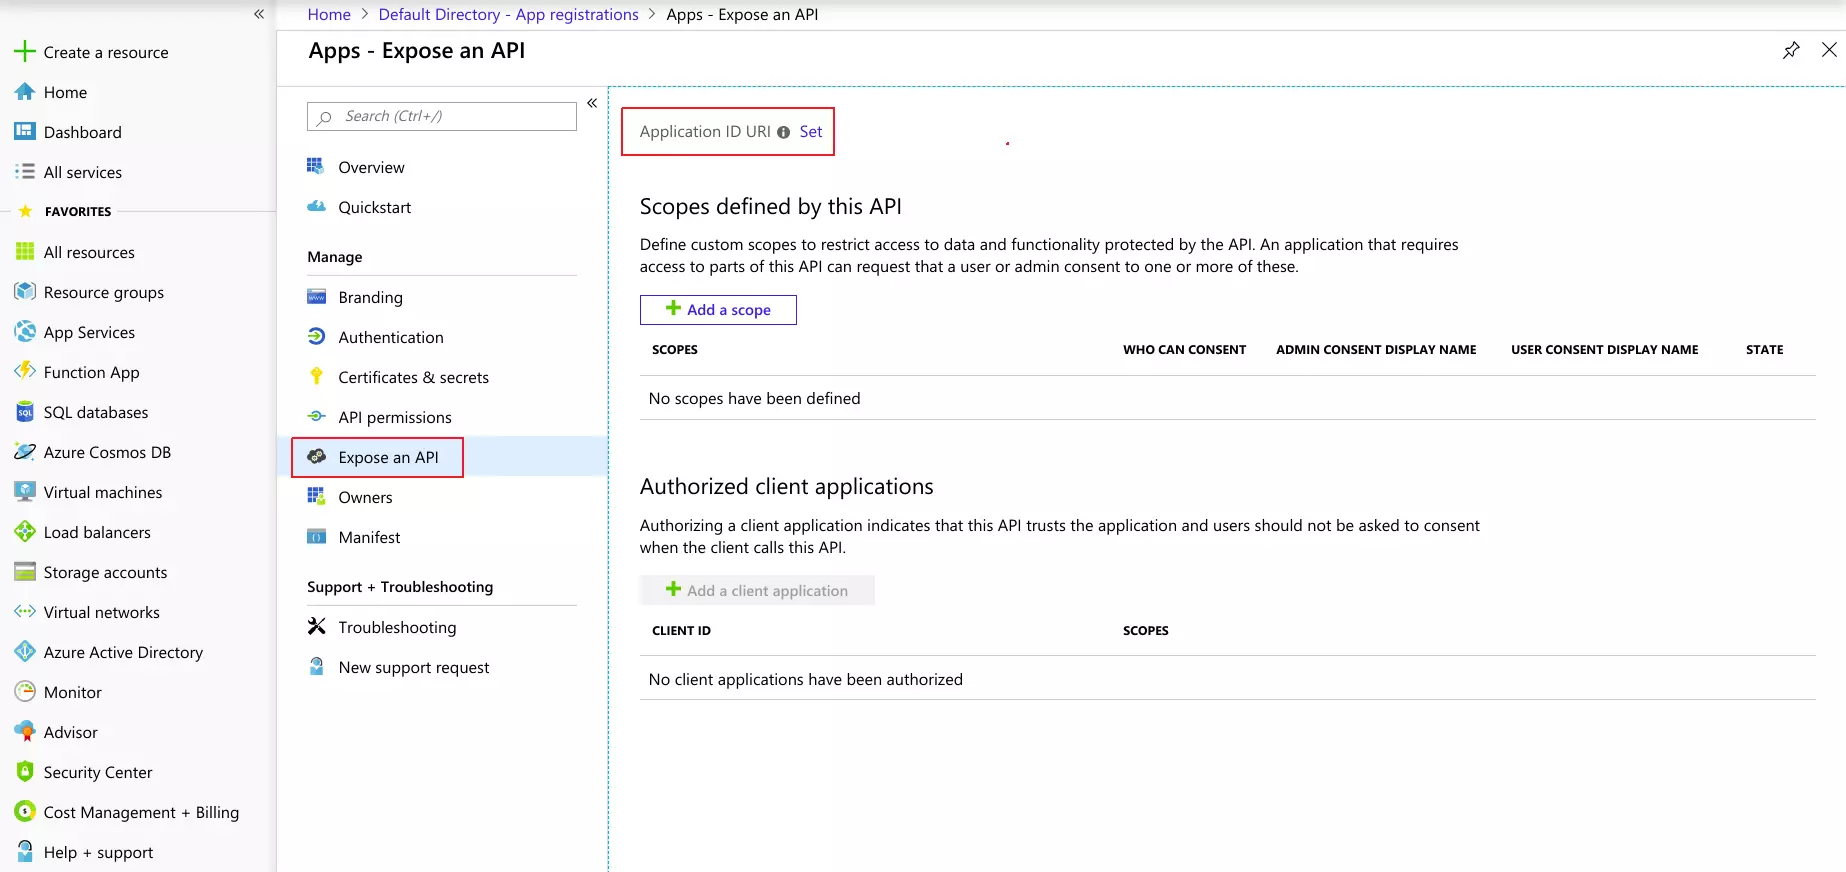 Umbraco SAML Single Sign-On (SSO) using Azure AD as IDP -  Expose an API